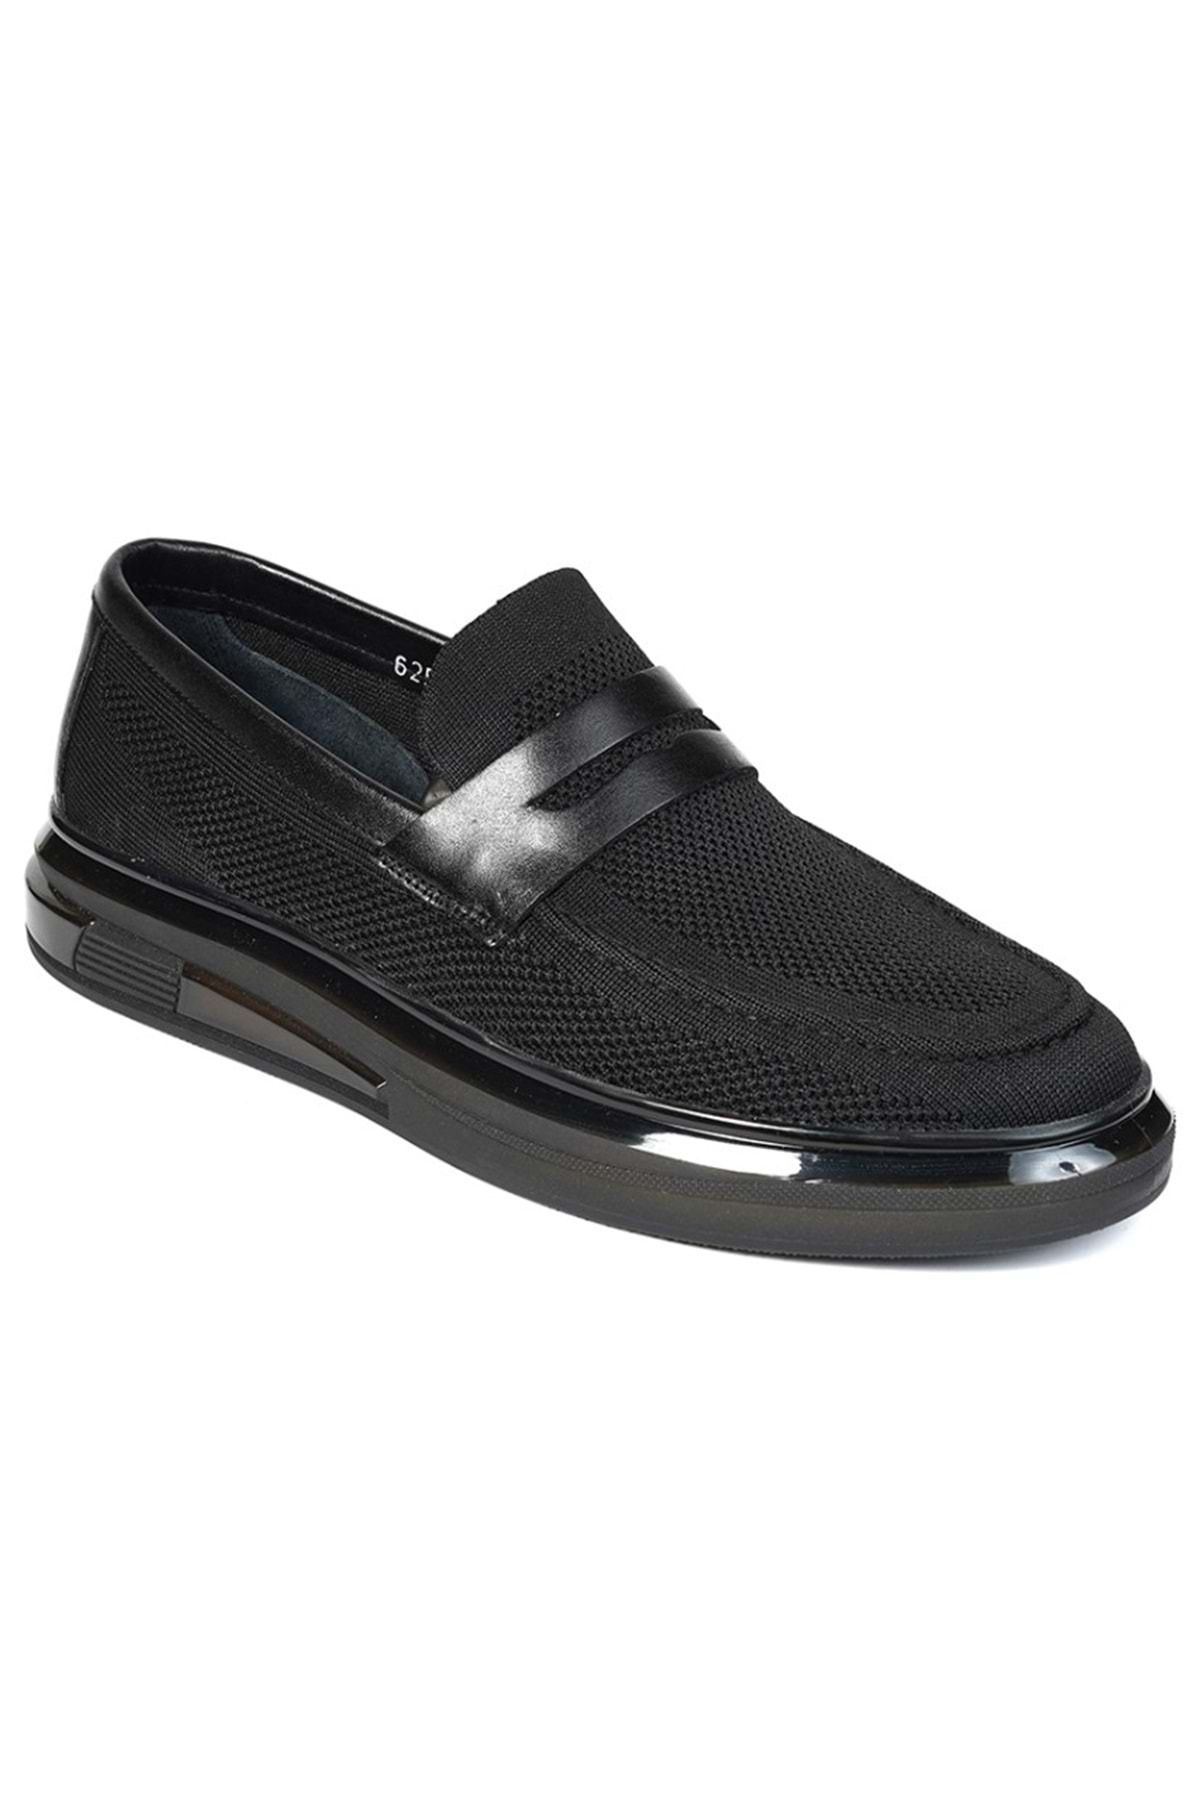 Greyder 62598 Mr Erkek Sneaker Casual Ayakkabı Siyah